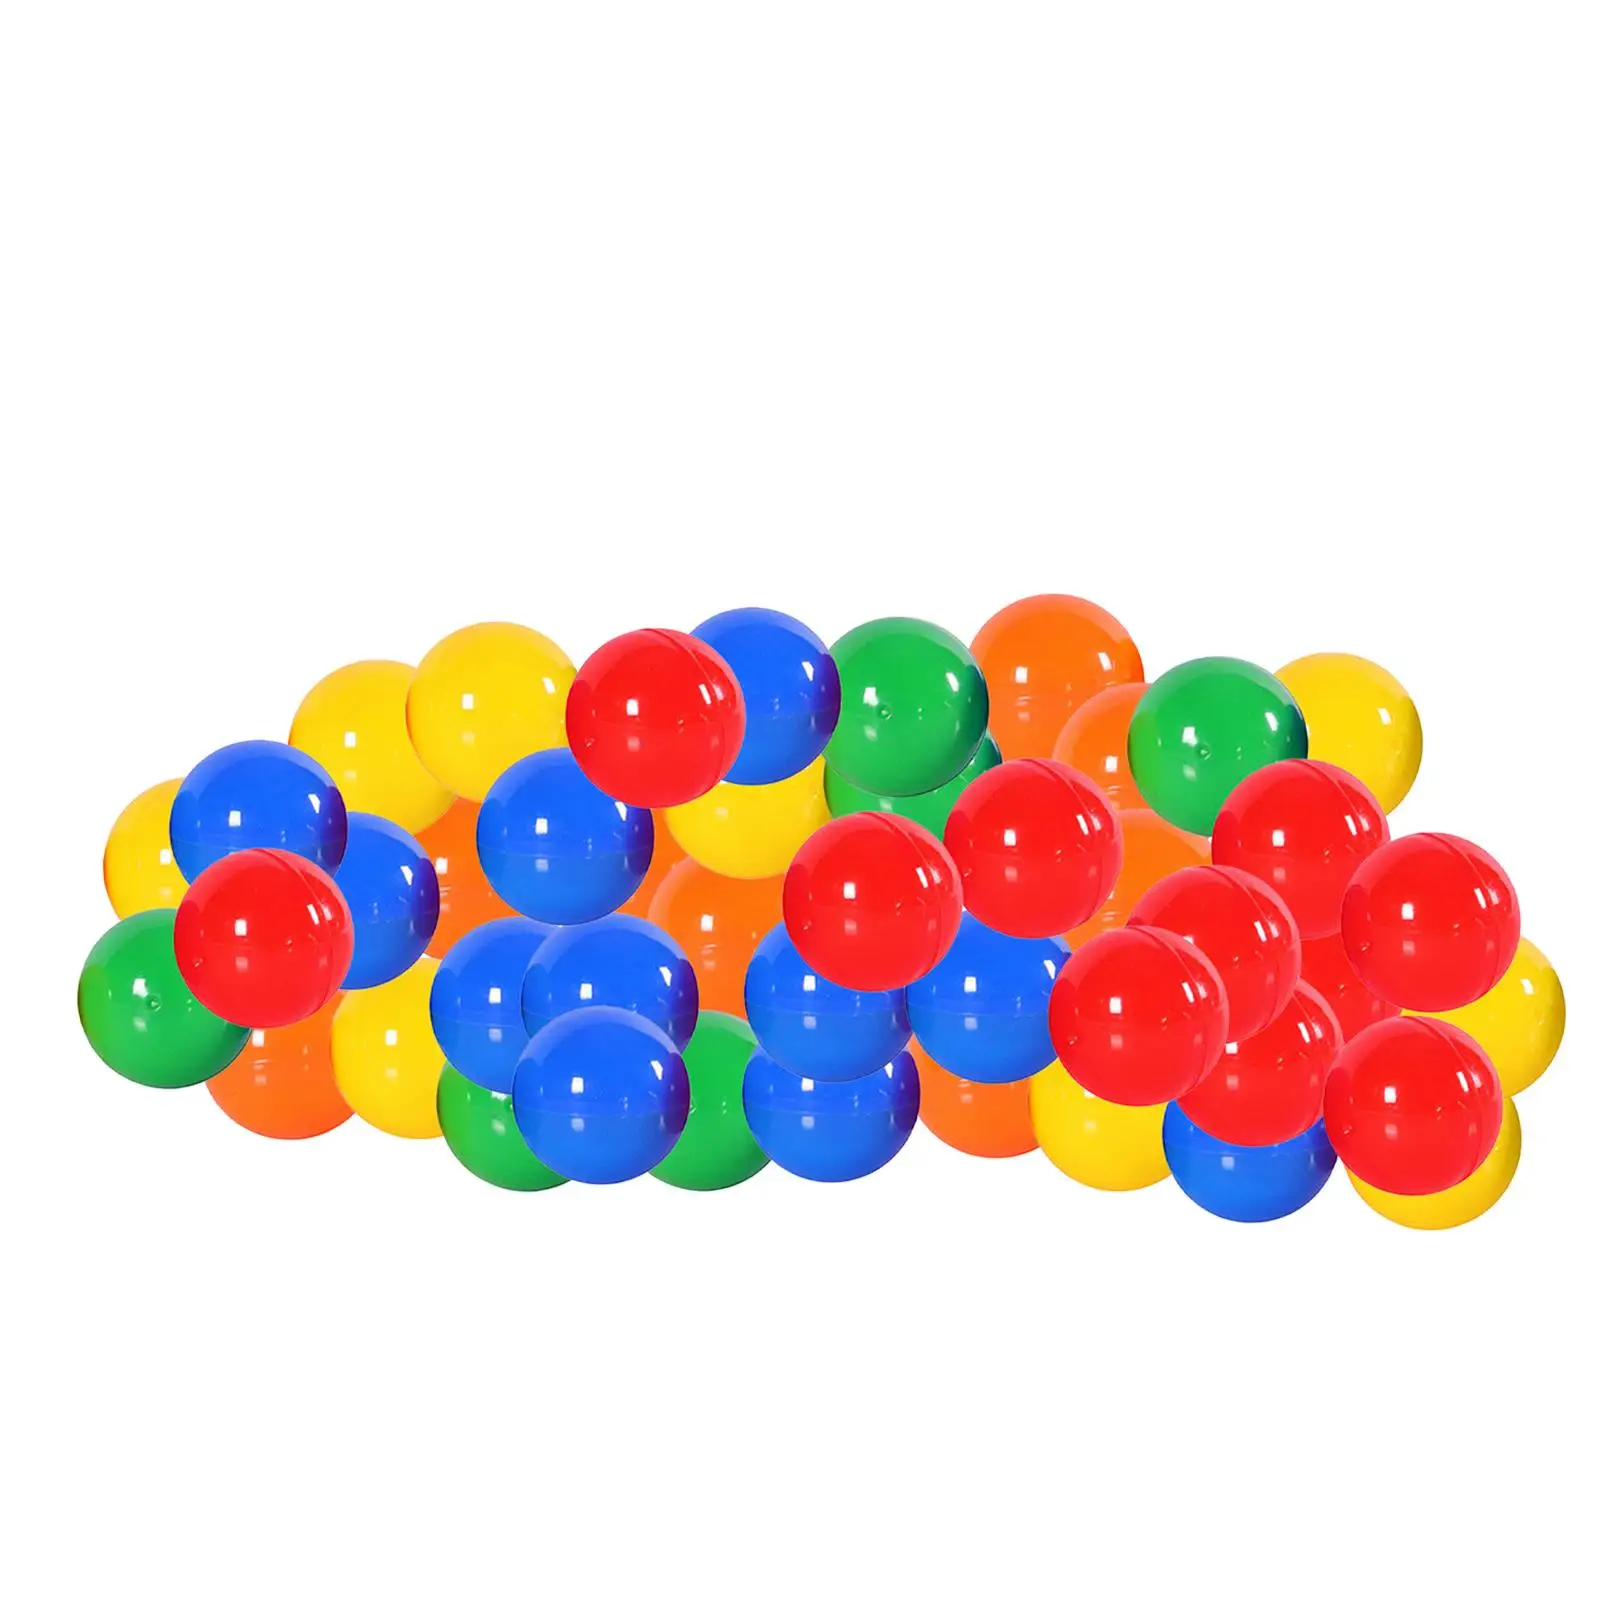 50 Pieces Bingo Ball Accessories Replacement Parts Raffle Balls Calling Balls